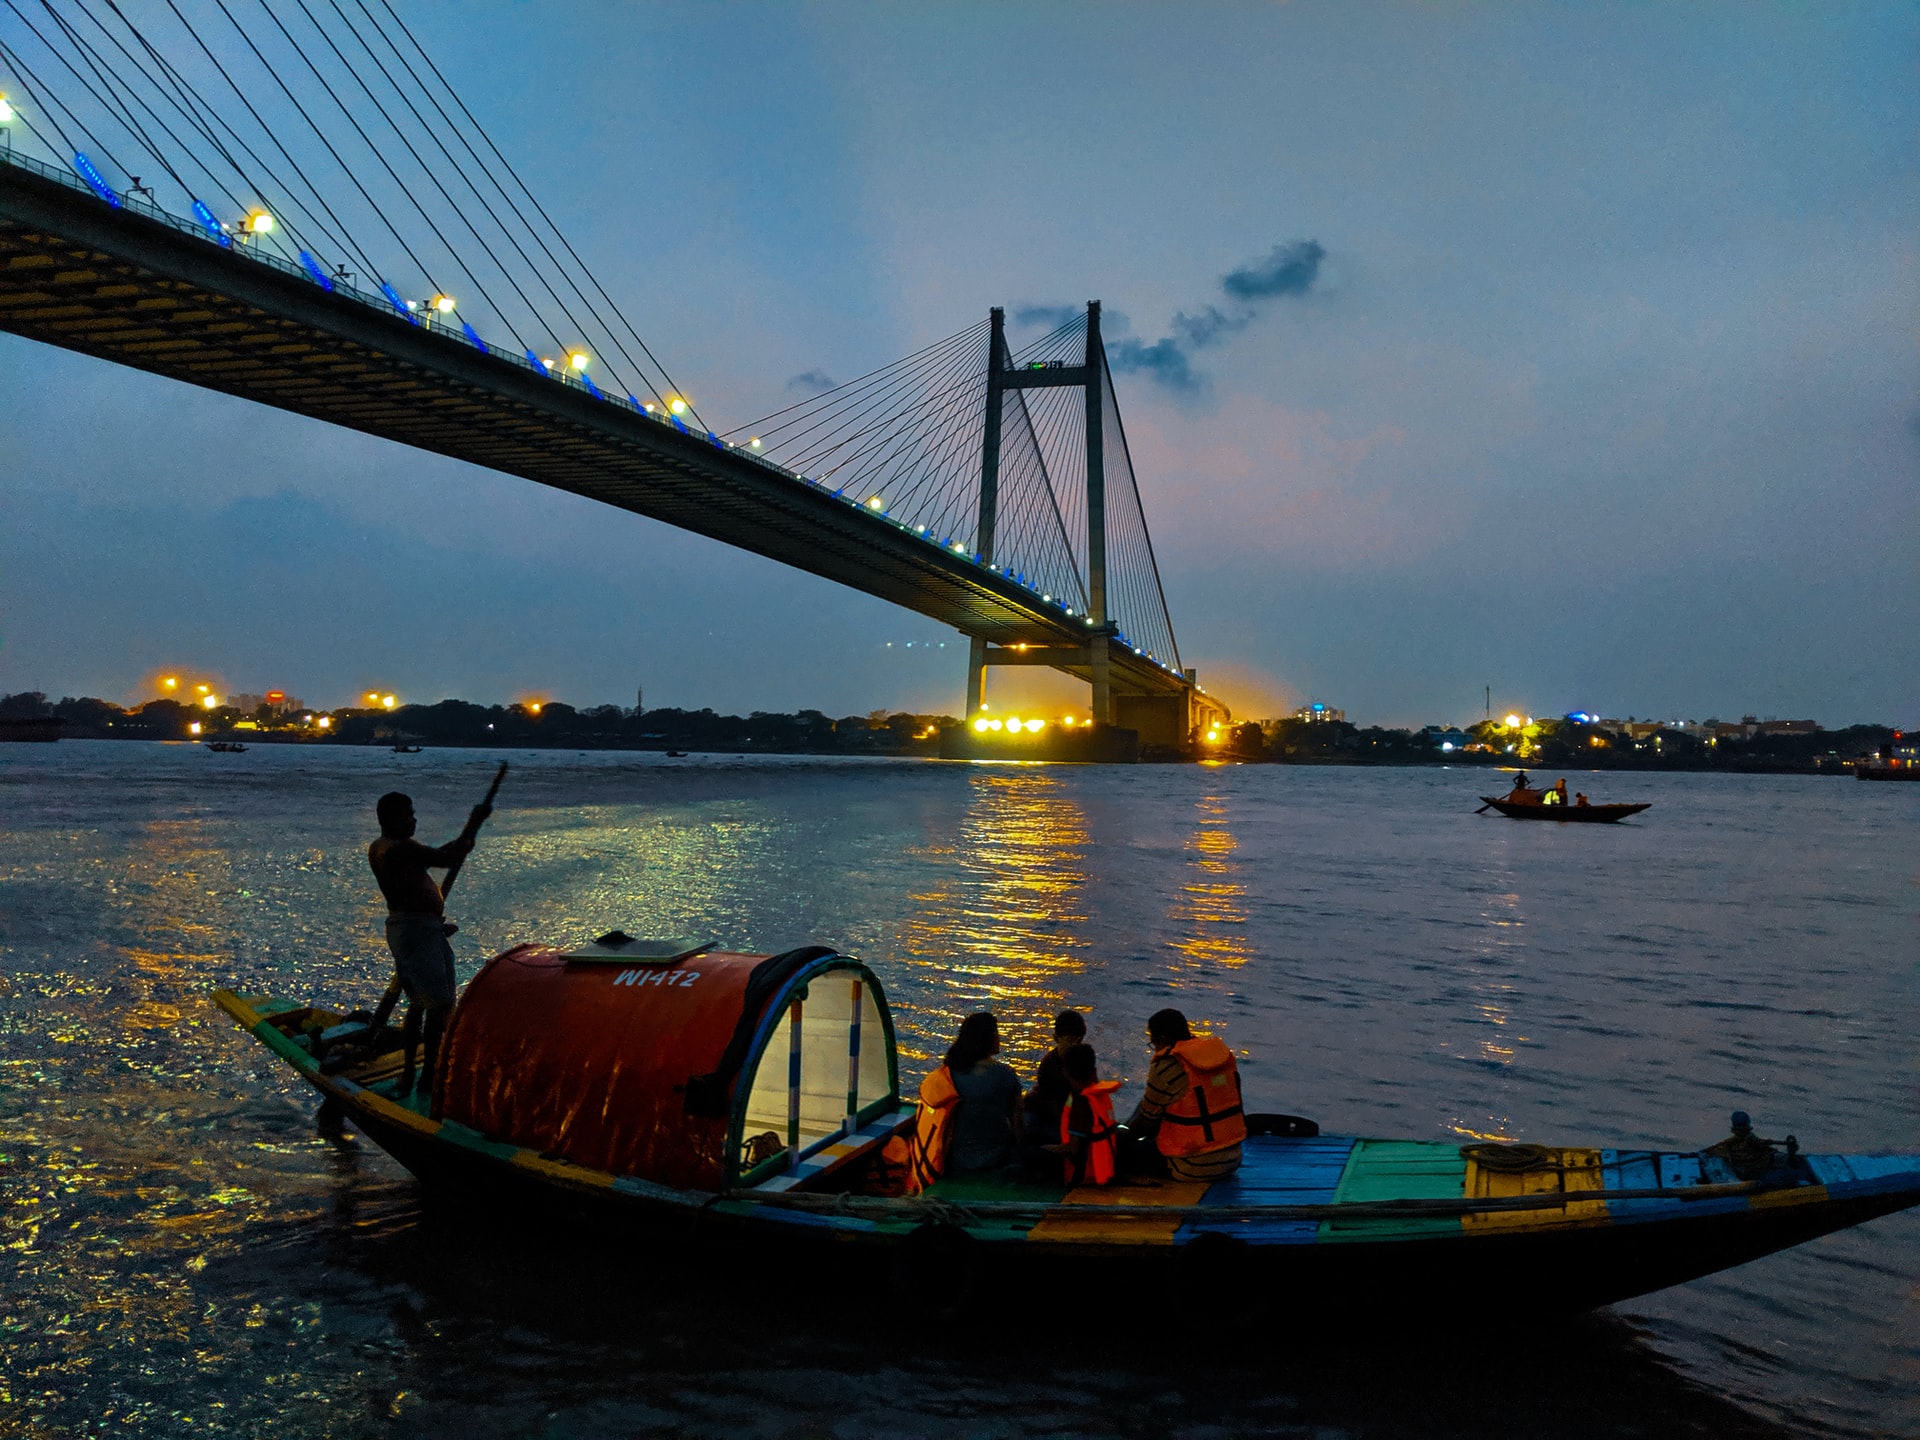 near kolkata tour place, kolkata tour and travel, Kolkata tour operators